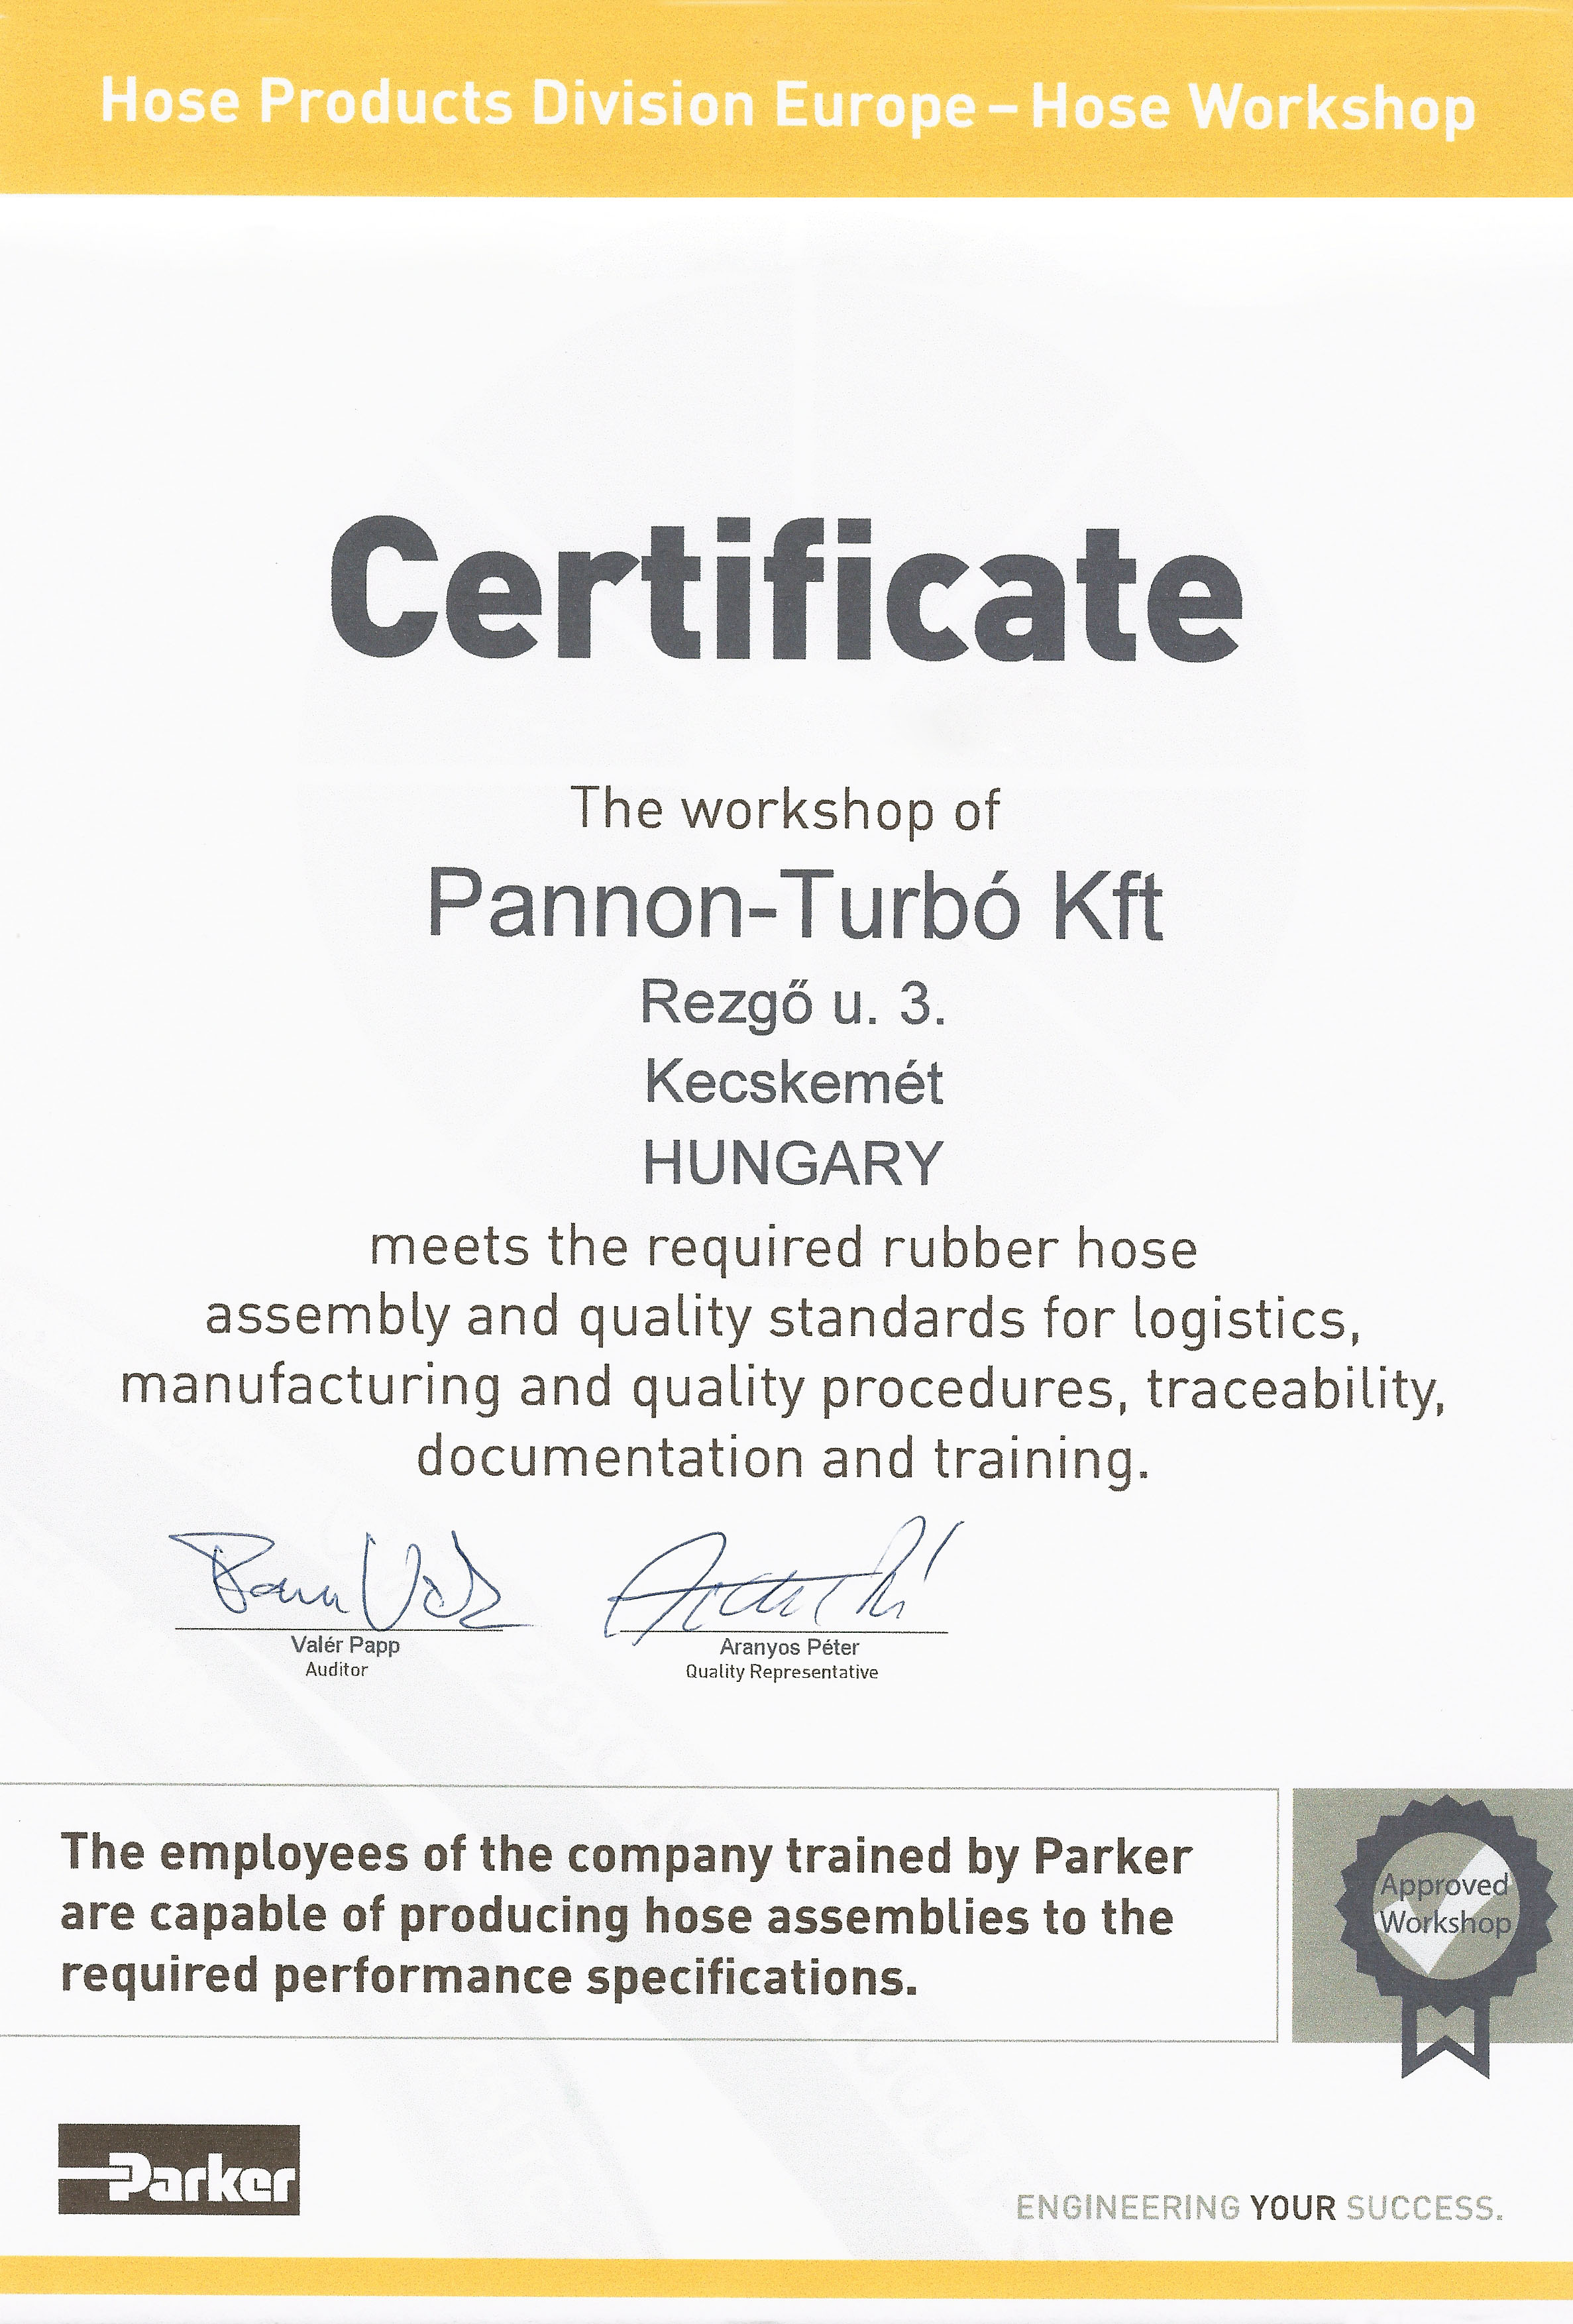 Pannon-Turbó Kft. Certificate HPDE Hose Workshop